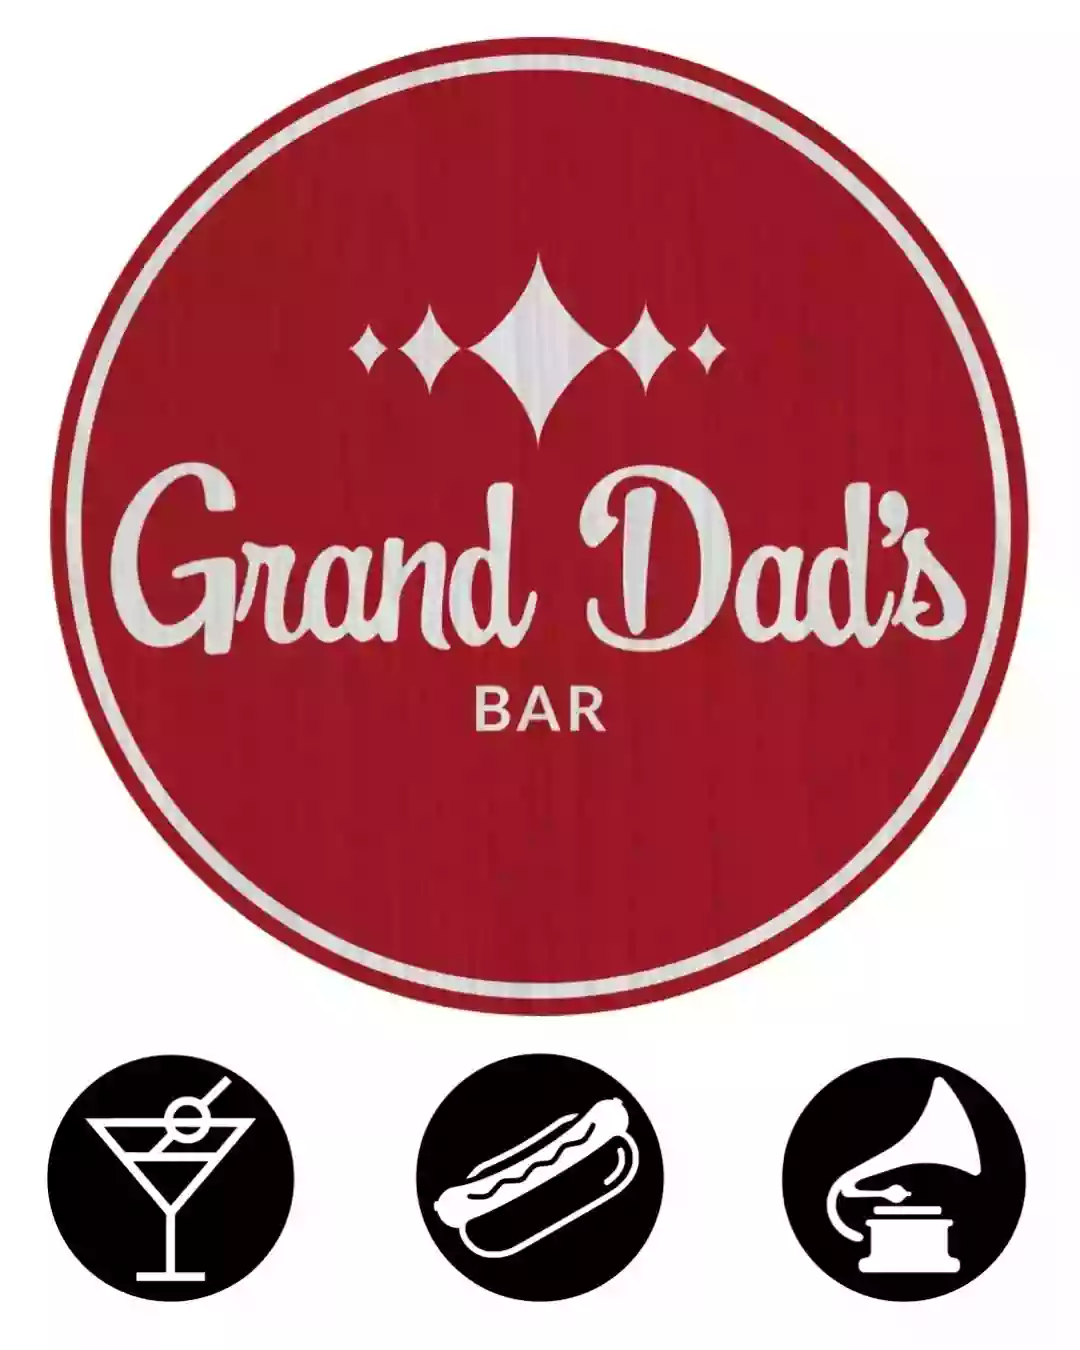 Grand Dad's Bar